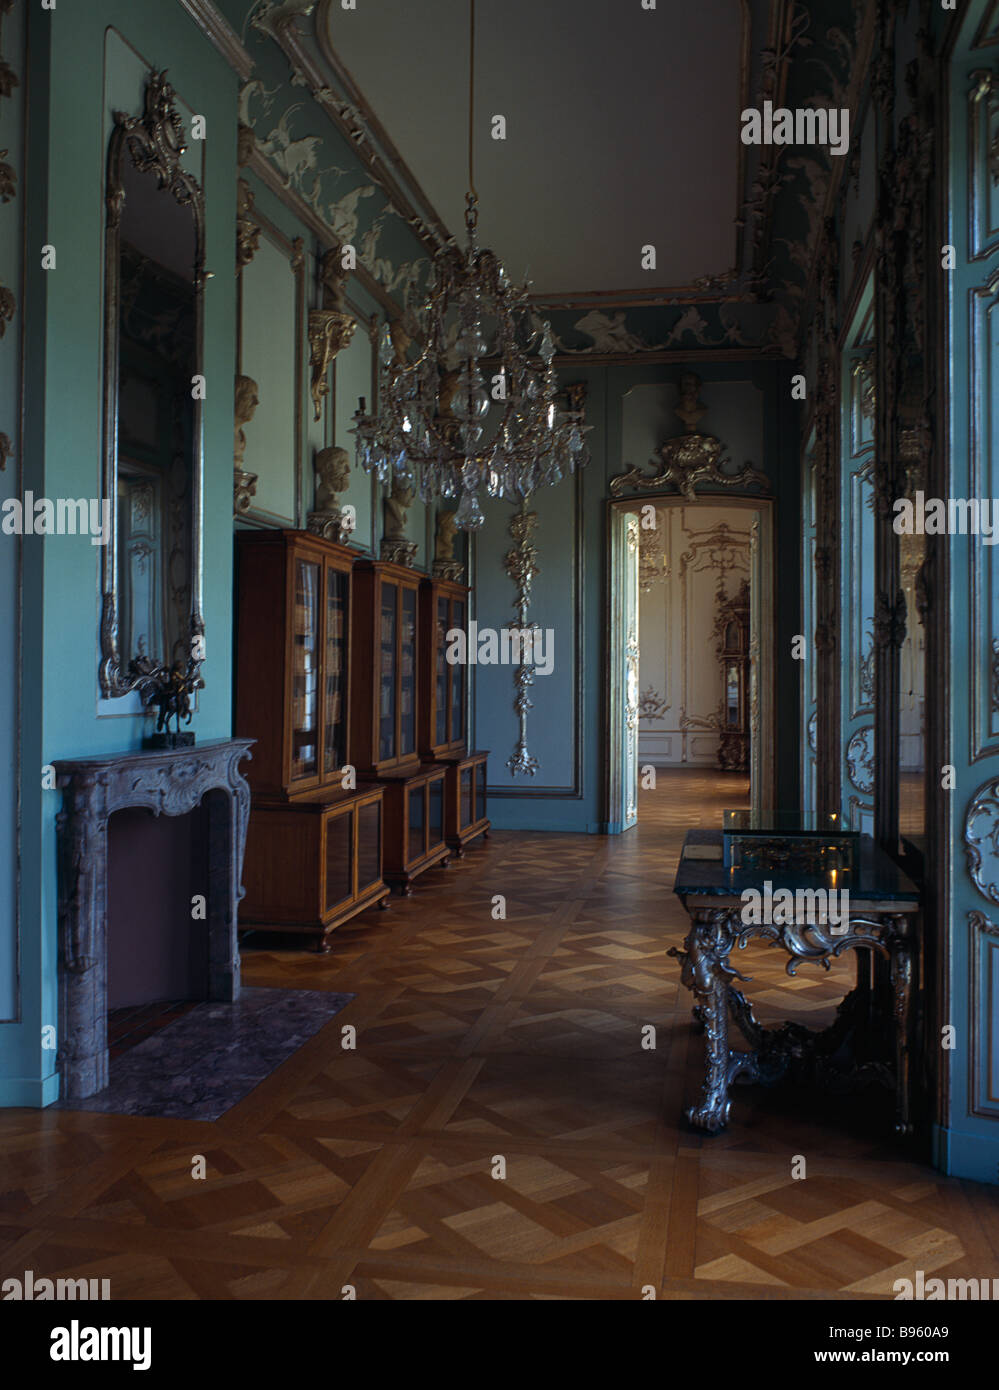 Germany, Berlin, Charlottenburg Palace interior. Stock Photo